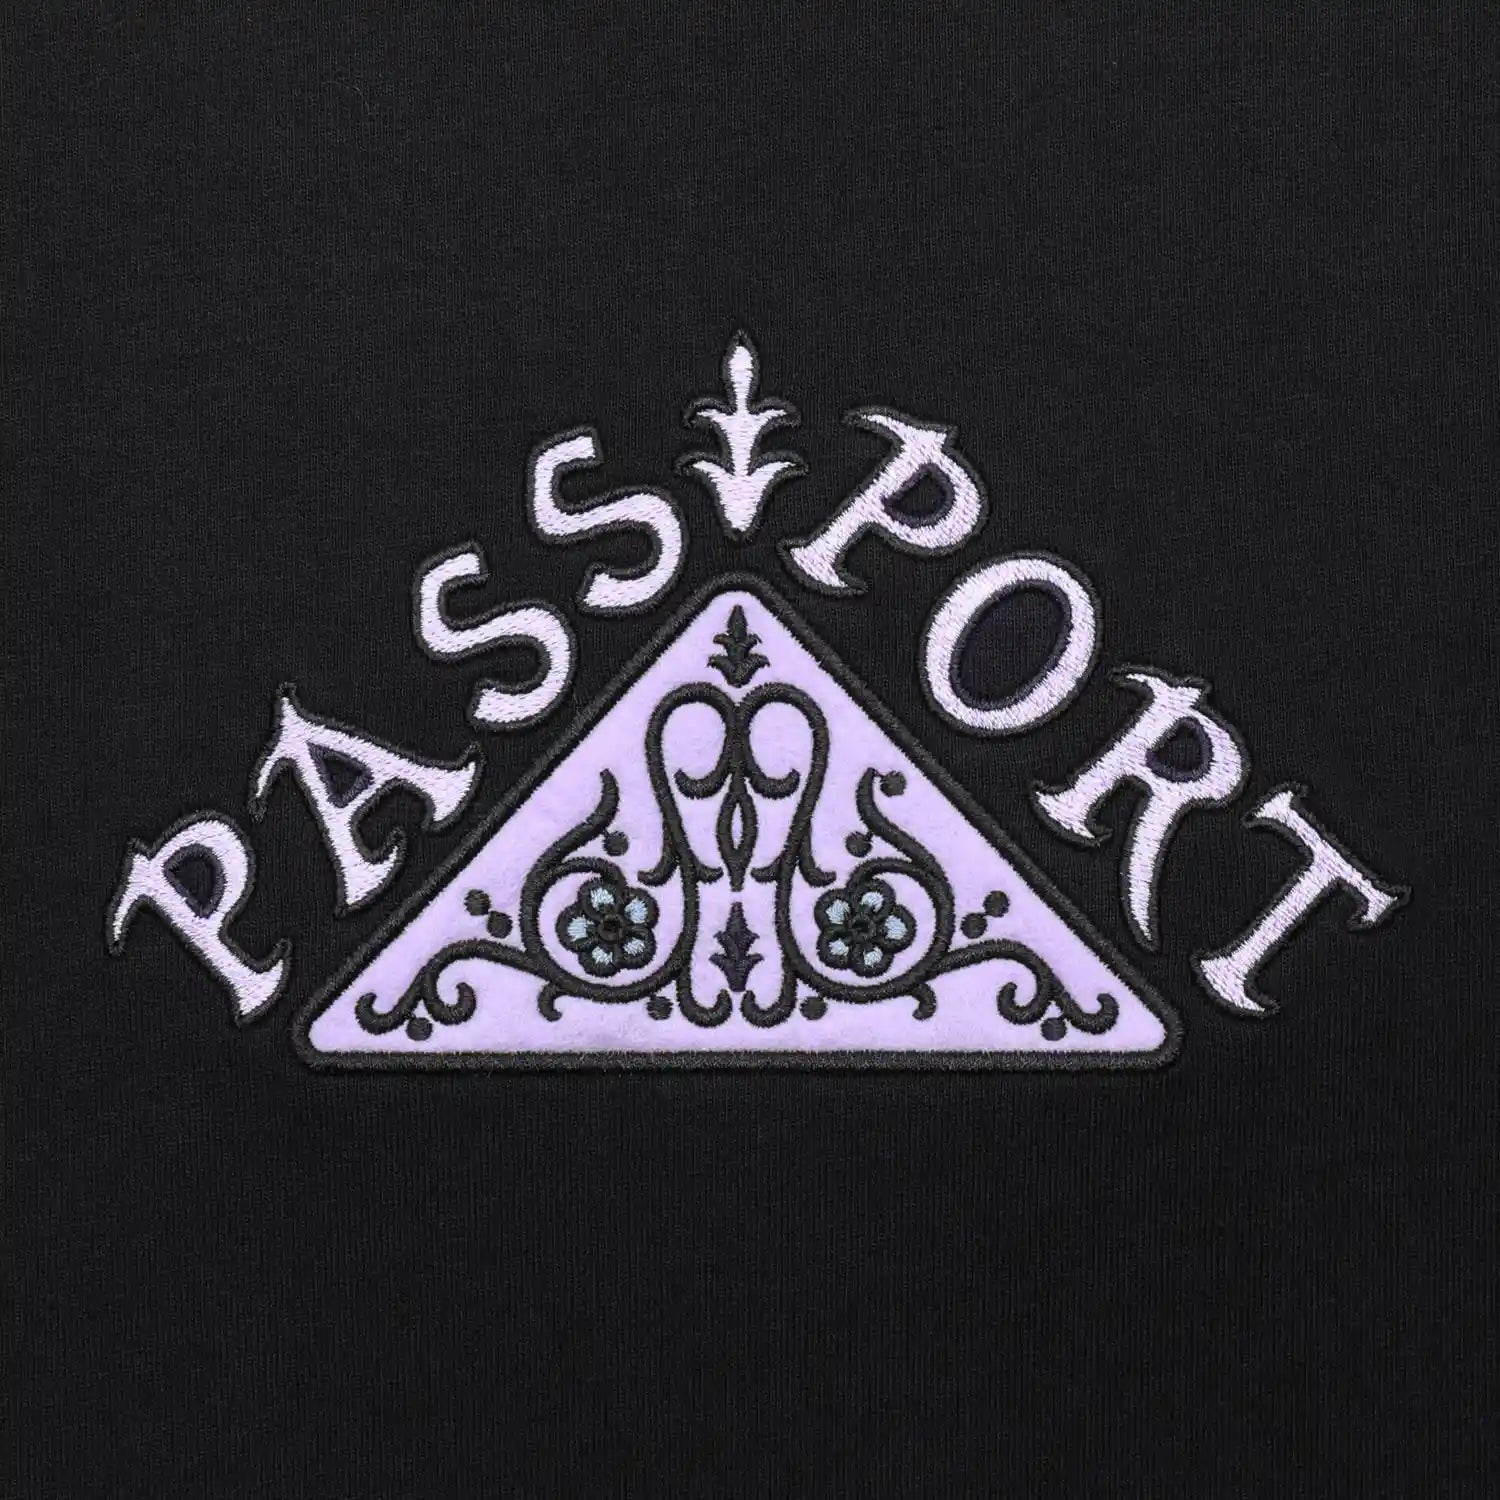 Passport Manuscript Tee, black - Tiki Room Skateboards - 2